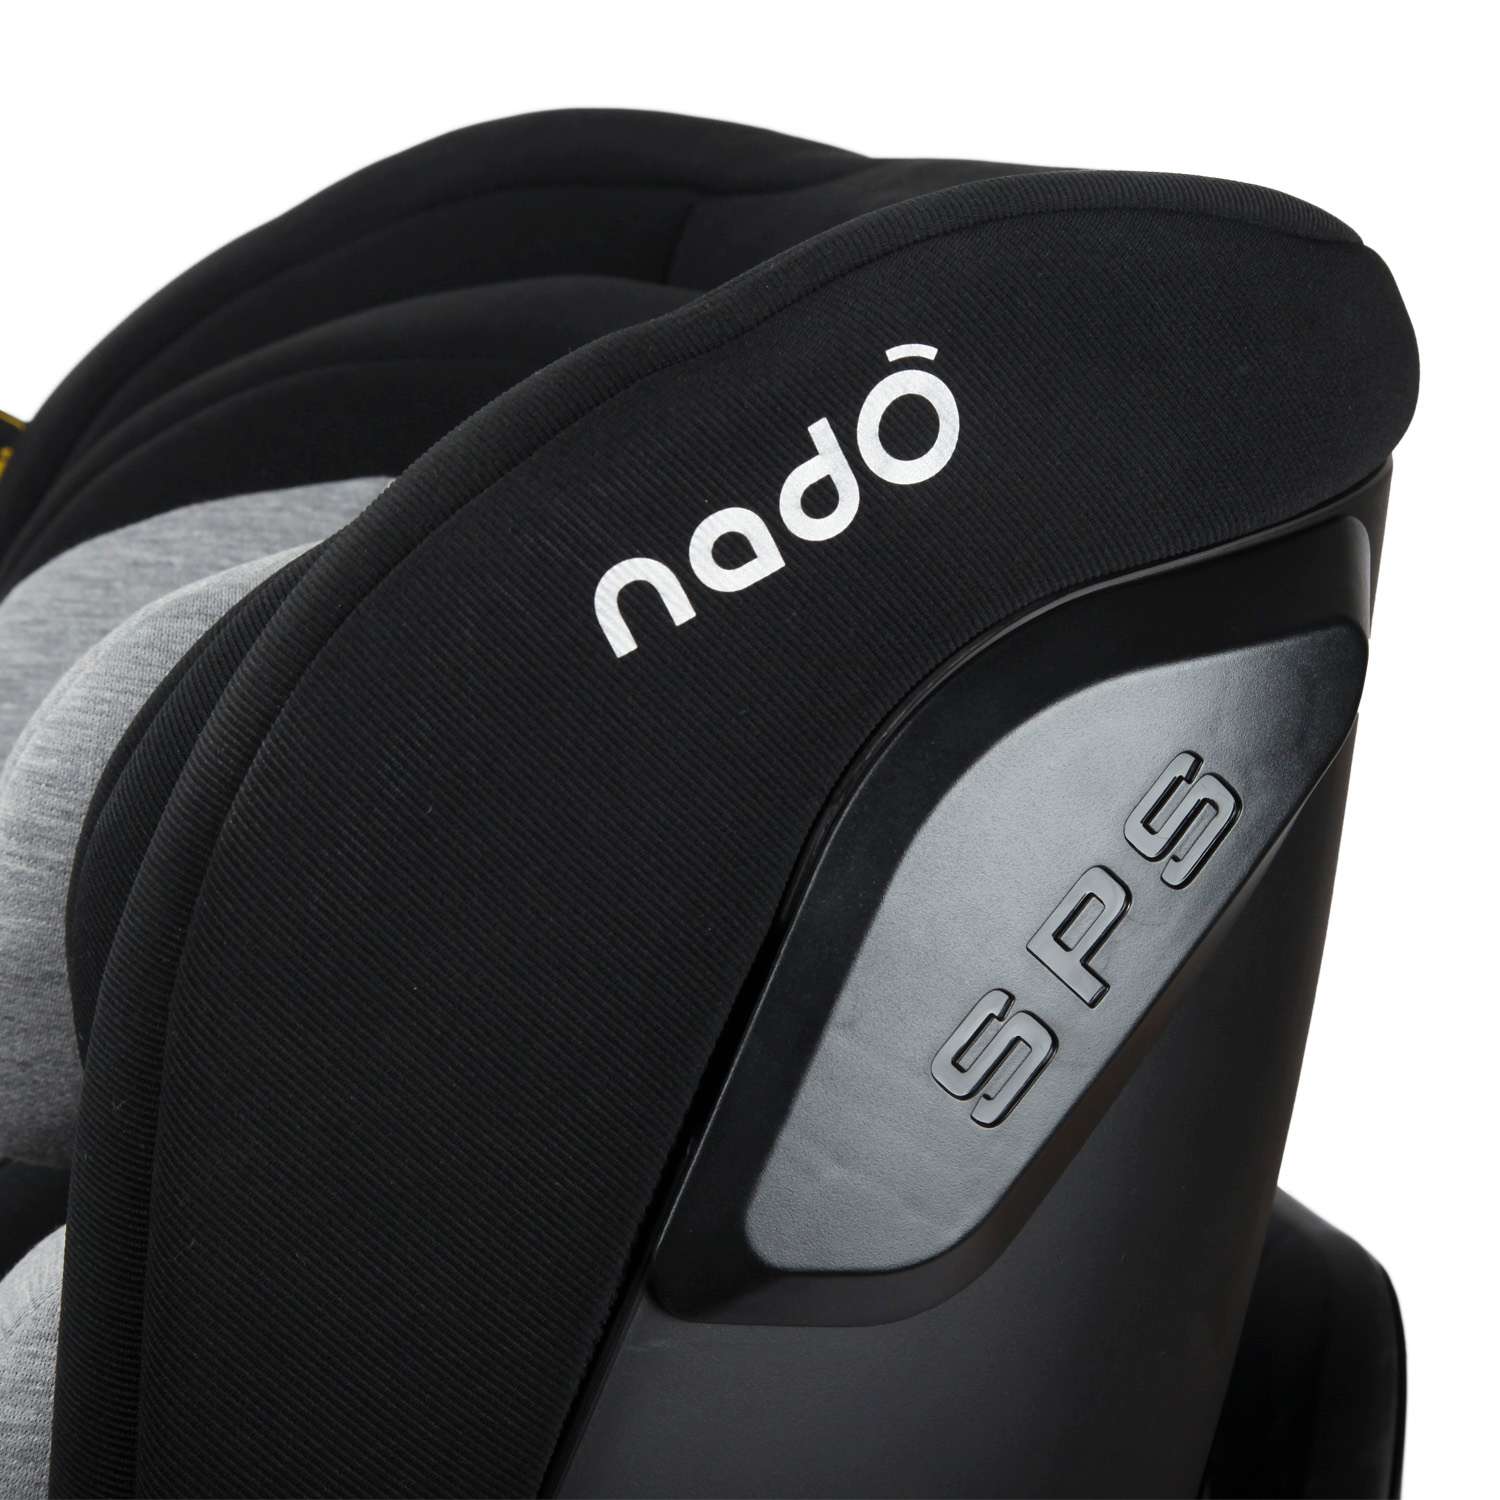 Автокресло Nado O3 Plus Black currant - фото 19